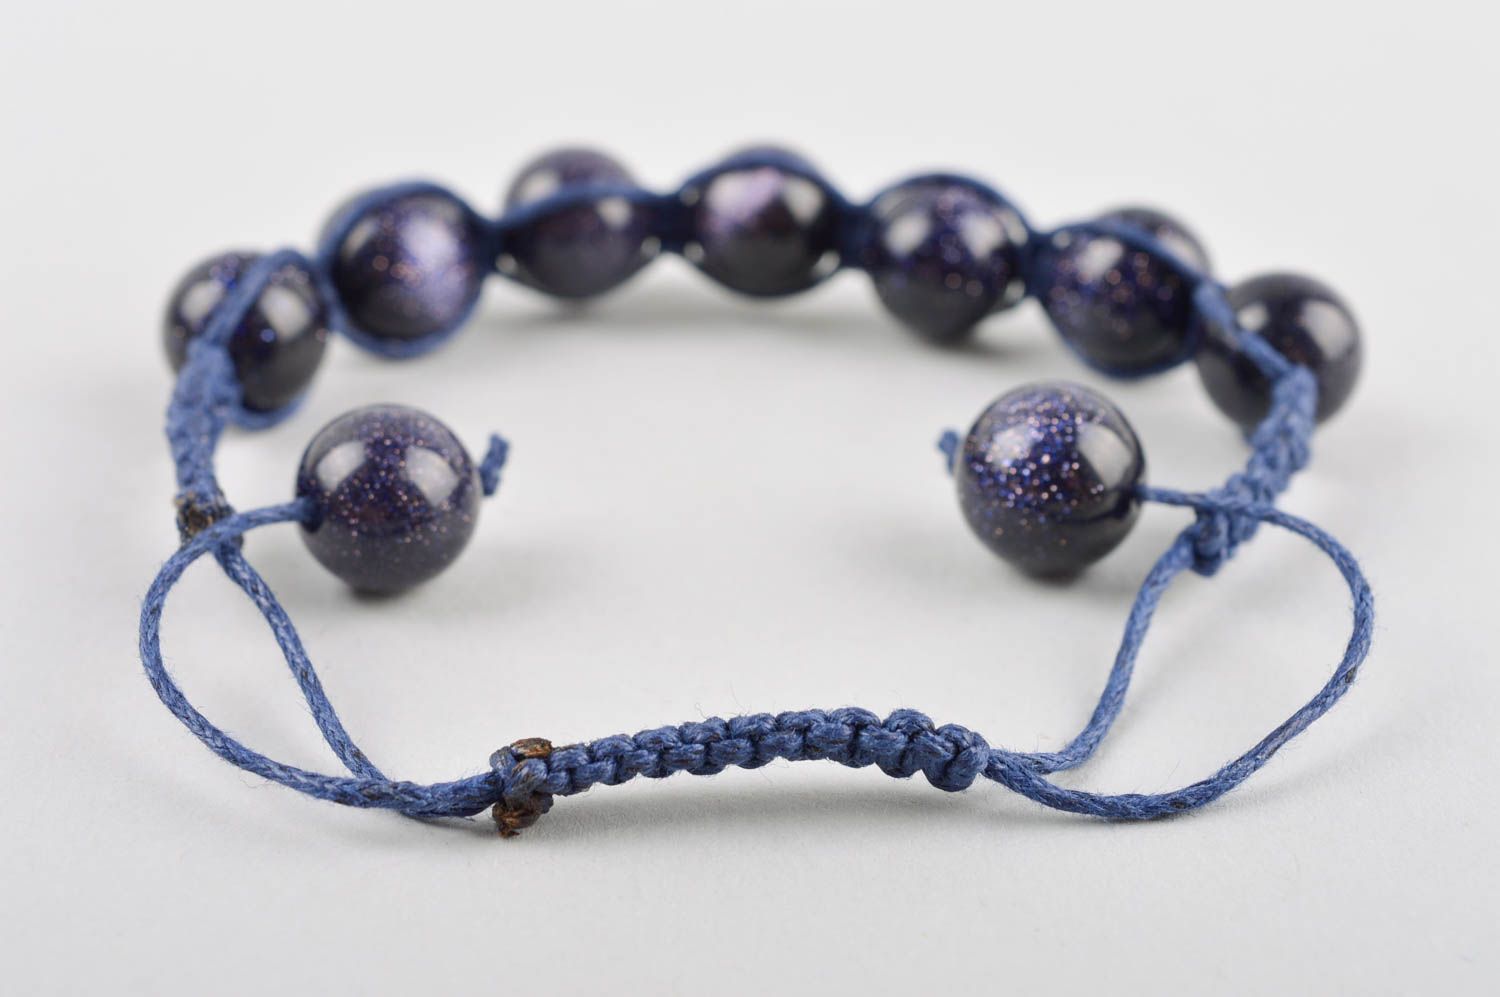 Unusual handmade woven cord bracelet charm bracelet artisan jewelry designs photo 4